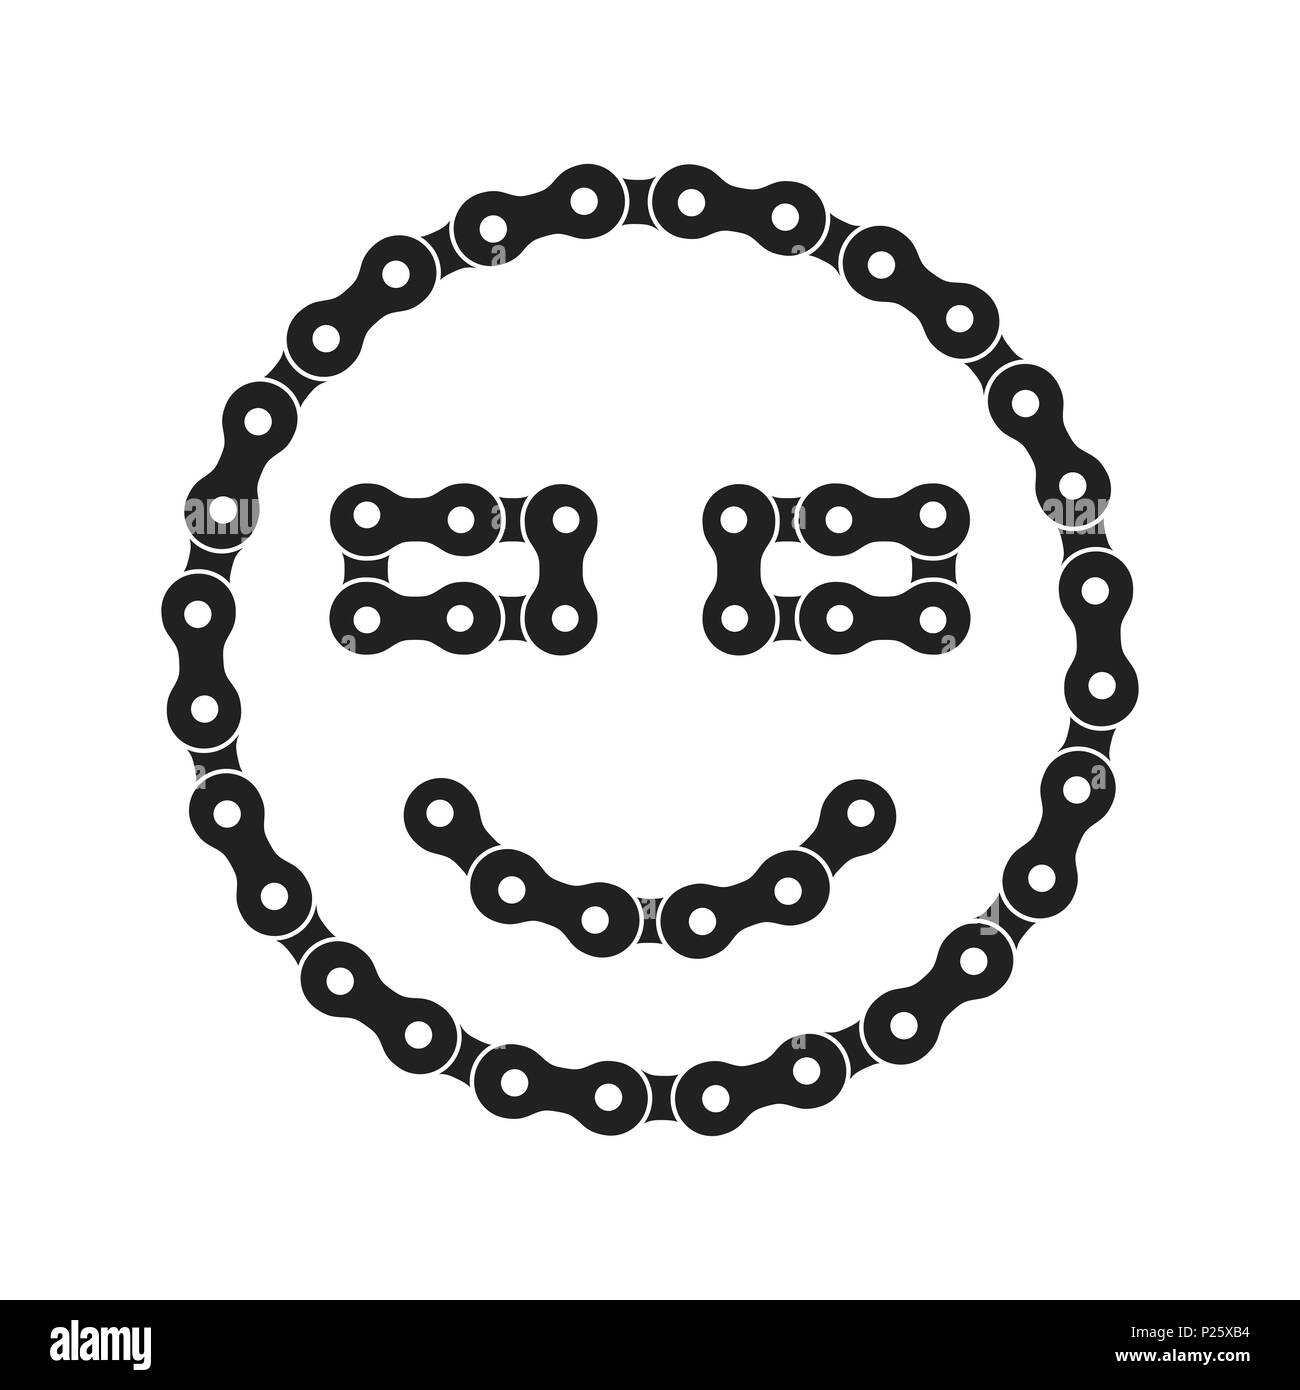 Sonrisa, sonriendo Emoji Icono de bicicleta o cadena de bicicleta. Cadena  de bicicleta en color negro Fotografía de stock - Alamy